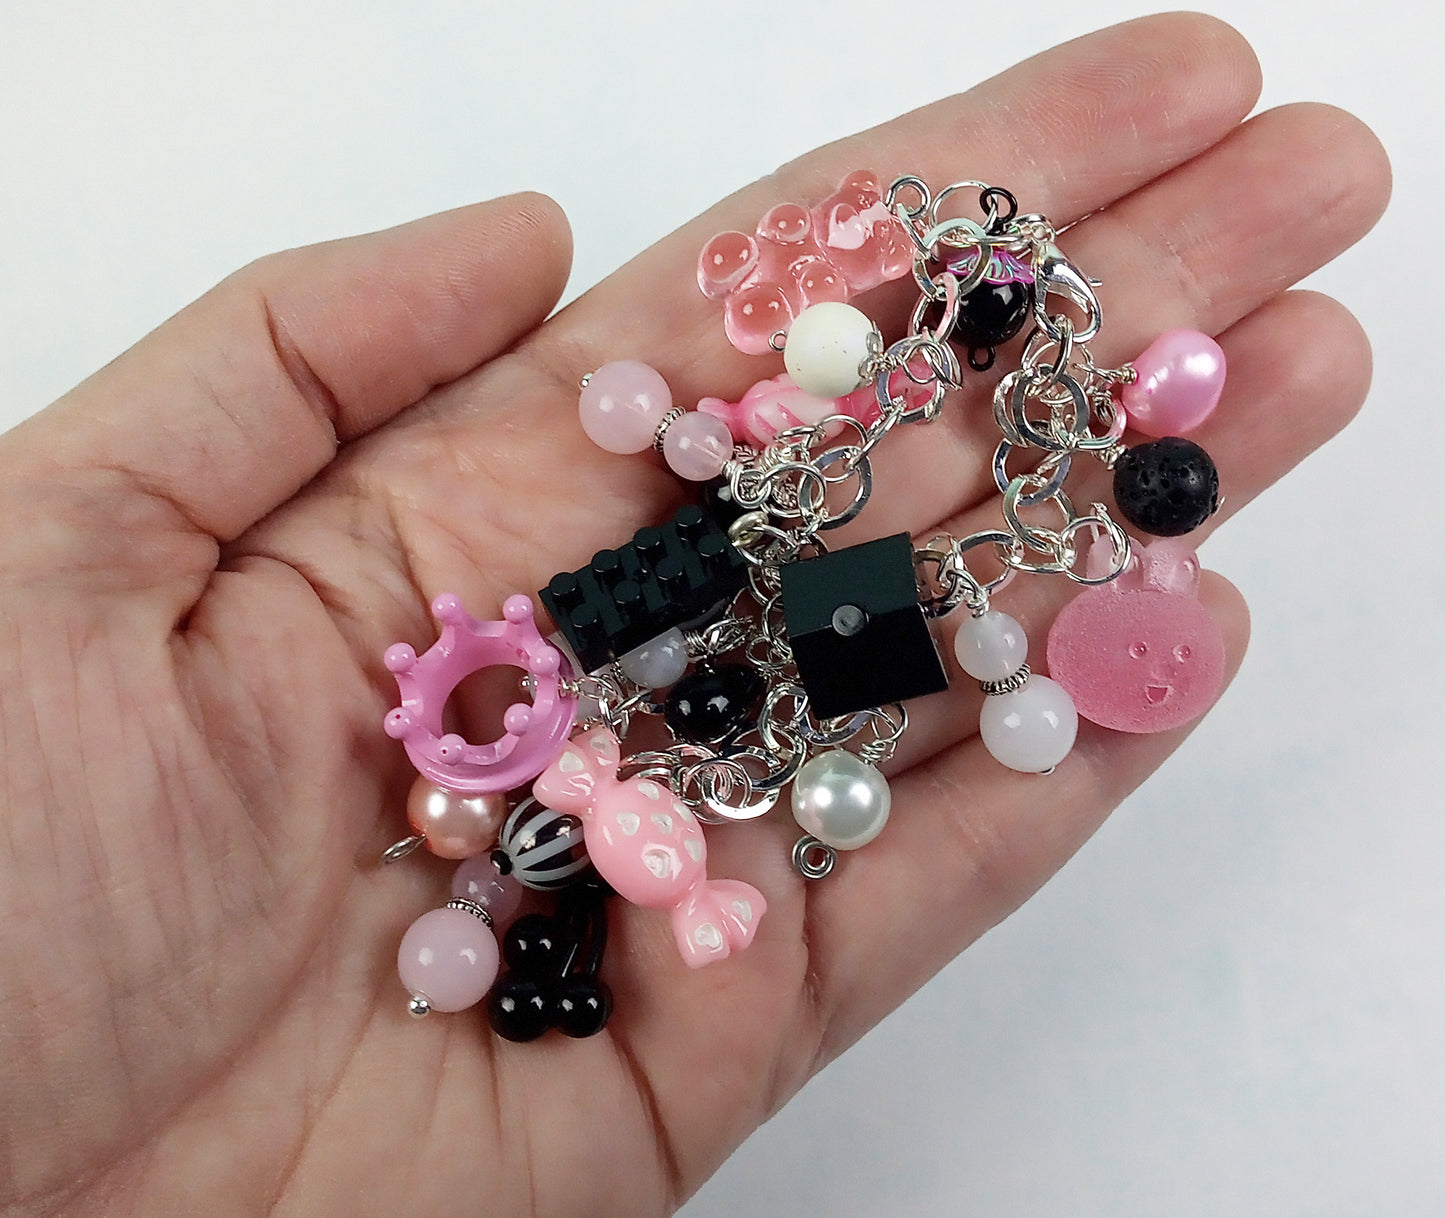 Pink & Black Charm Bracelet Kit, Creepy Cute Cha Cha DIY Bracelet - Adorabilities Charms & Trinkets